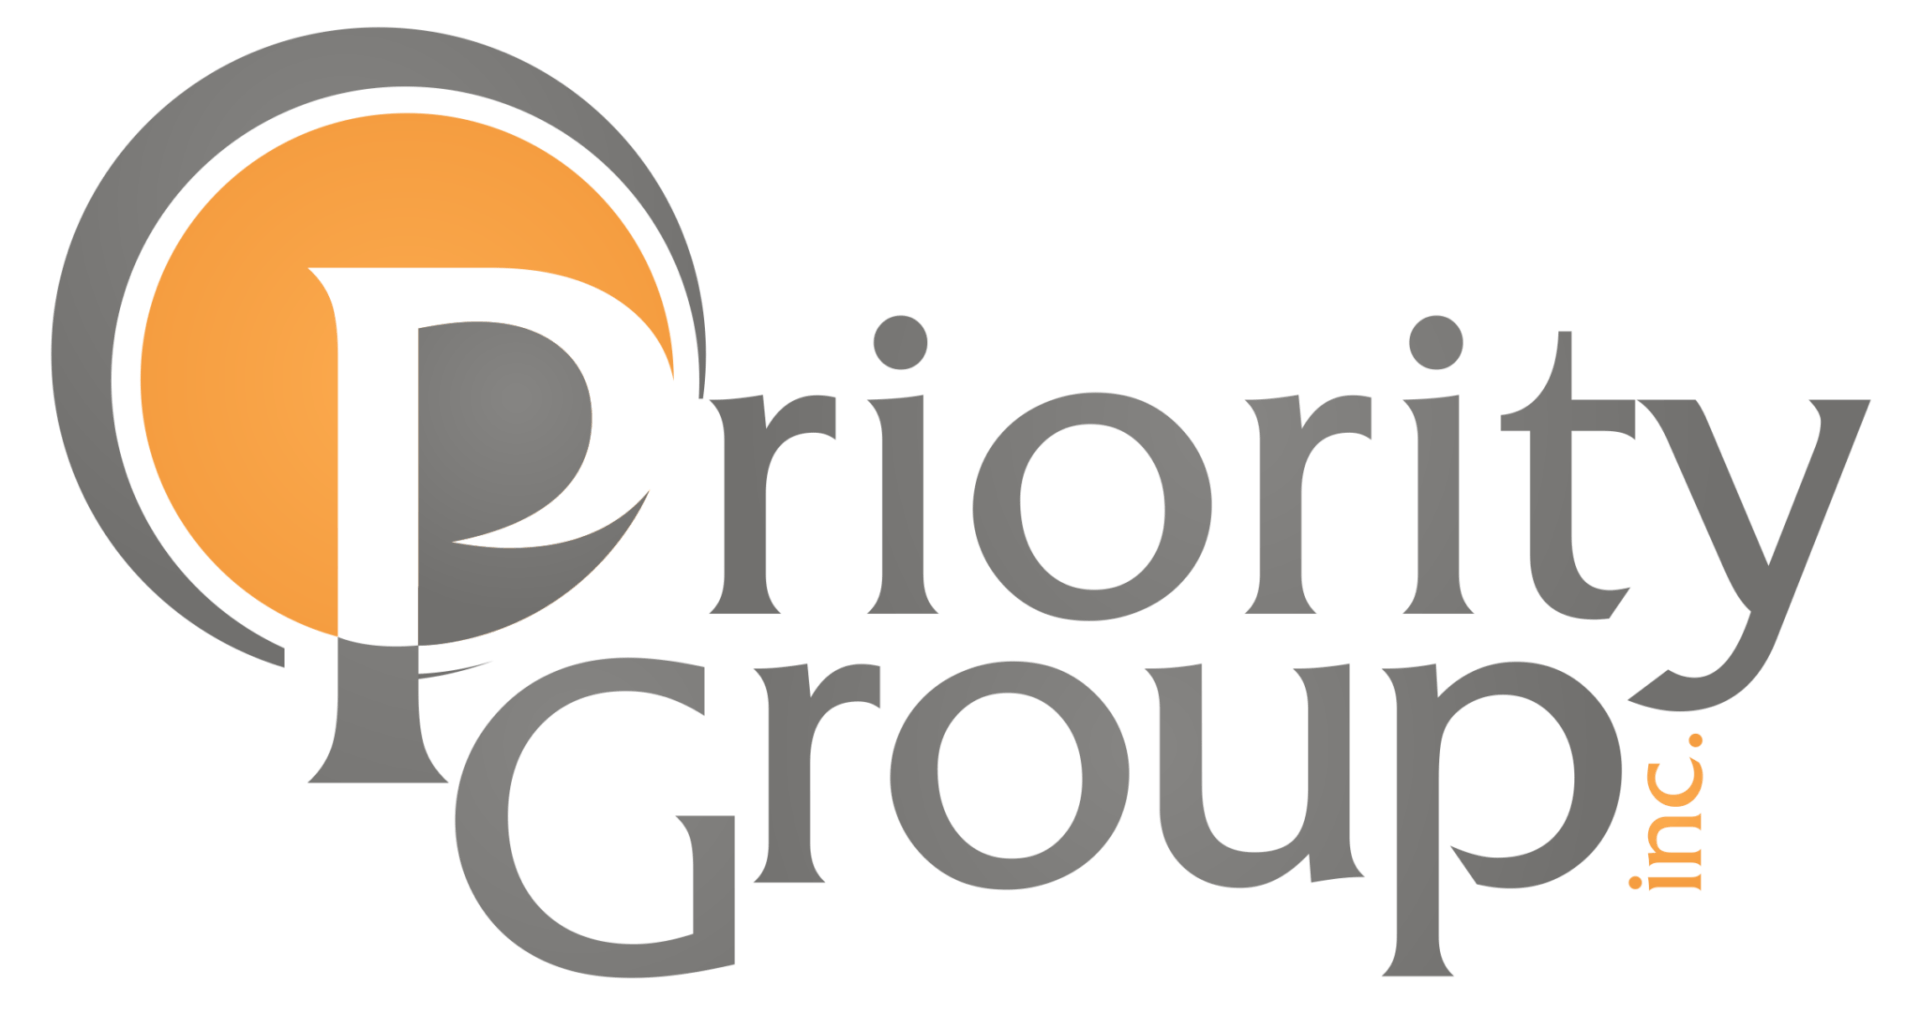 priority group logo